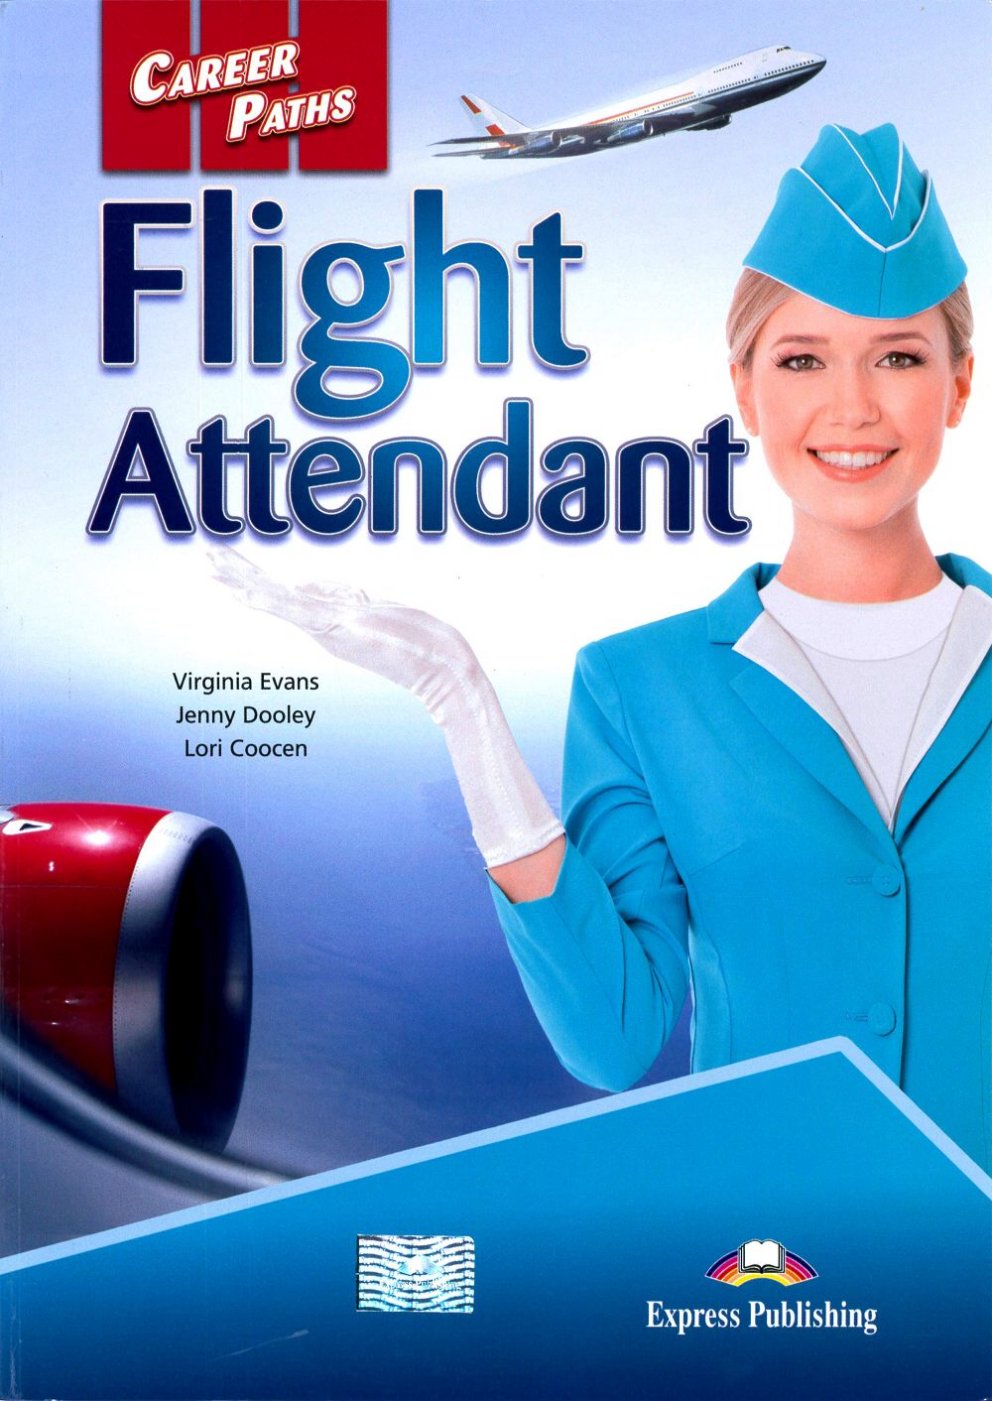 Career Paths: Flight Attendant...